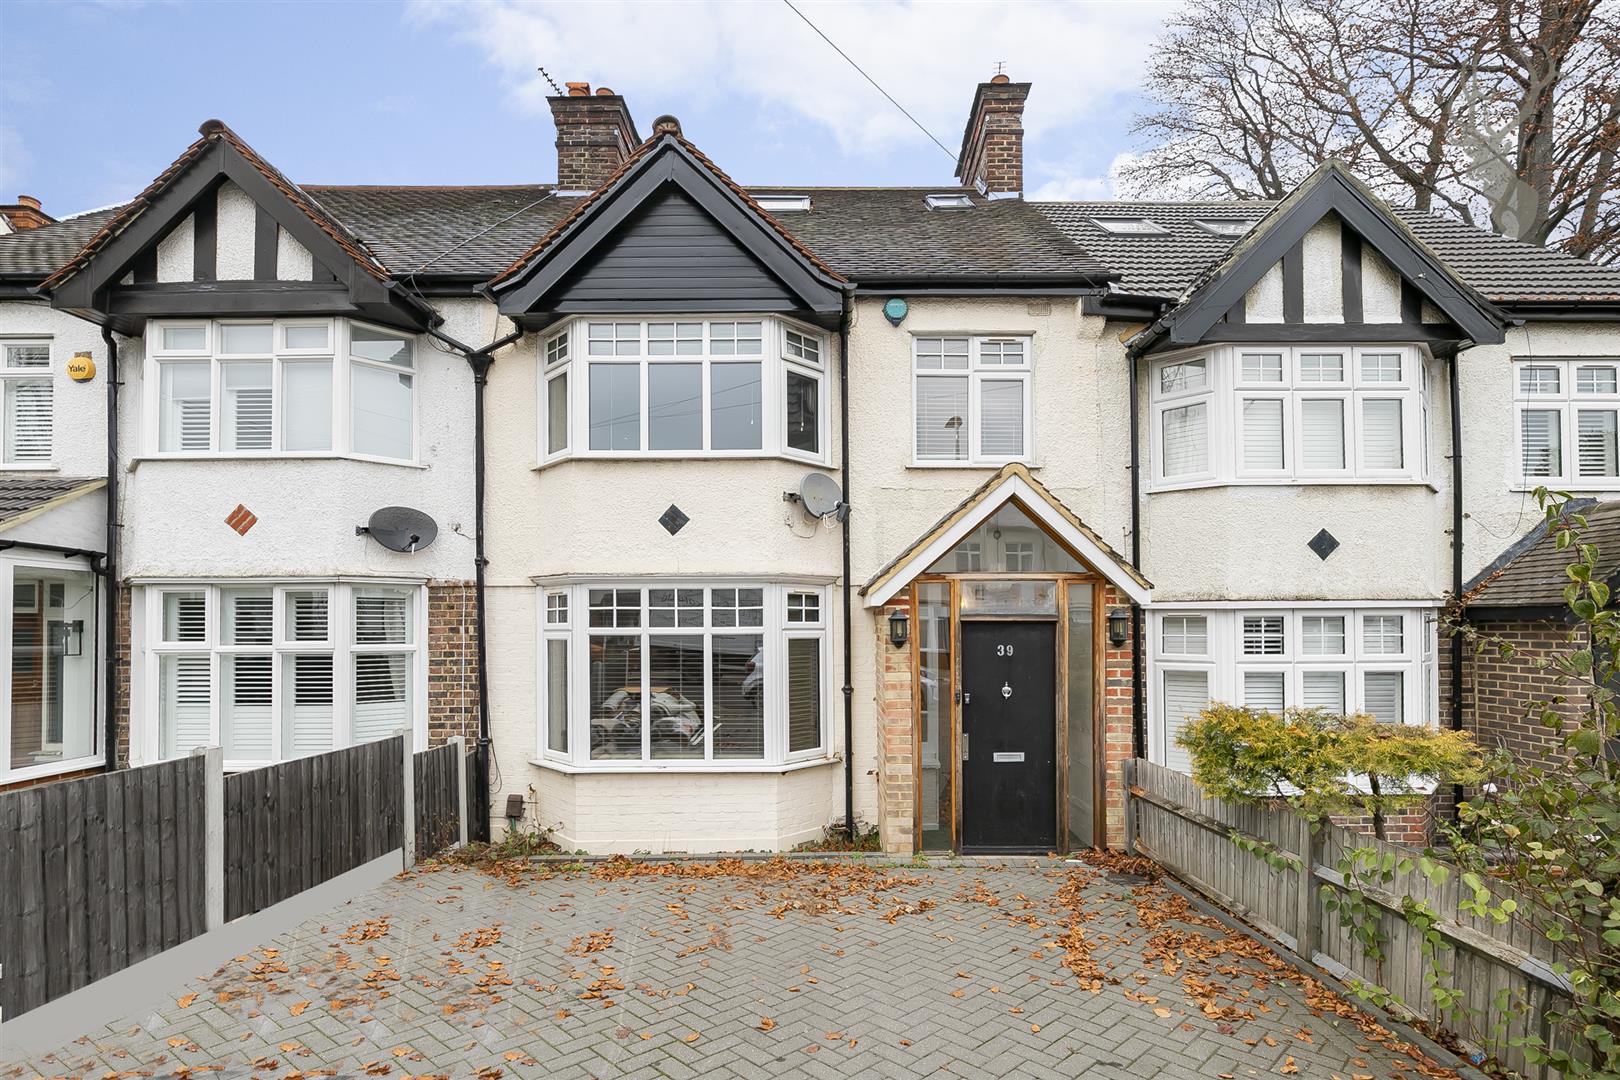 Similar Property: House in London